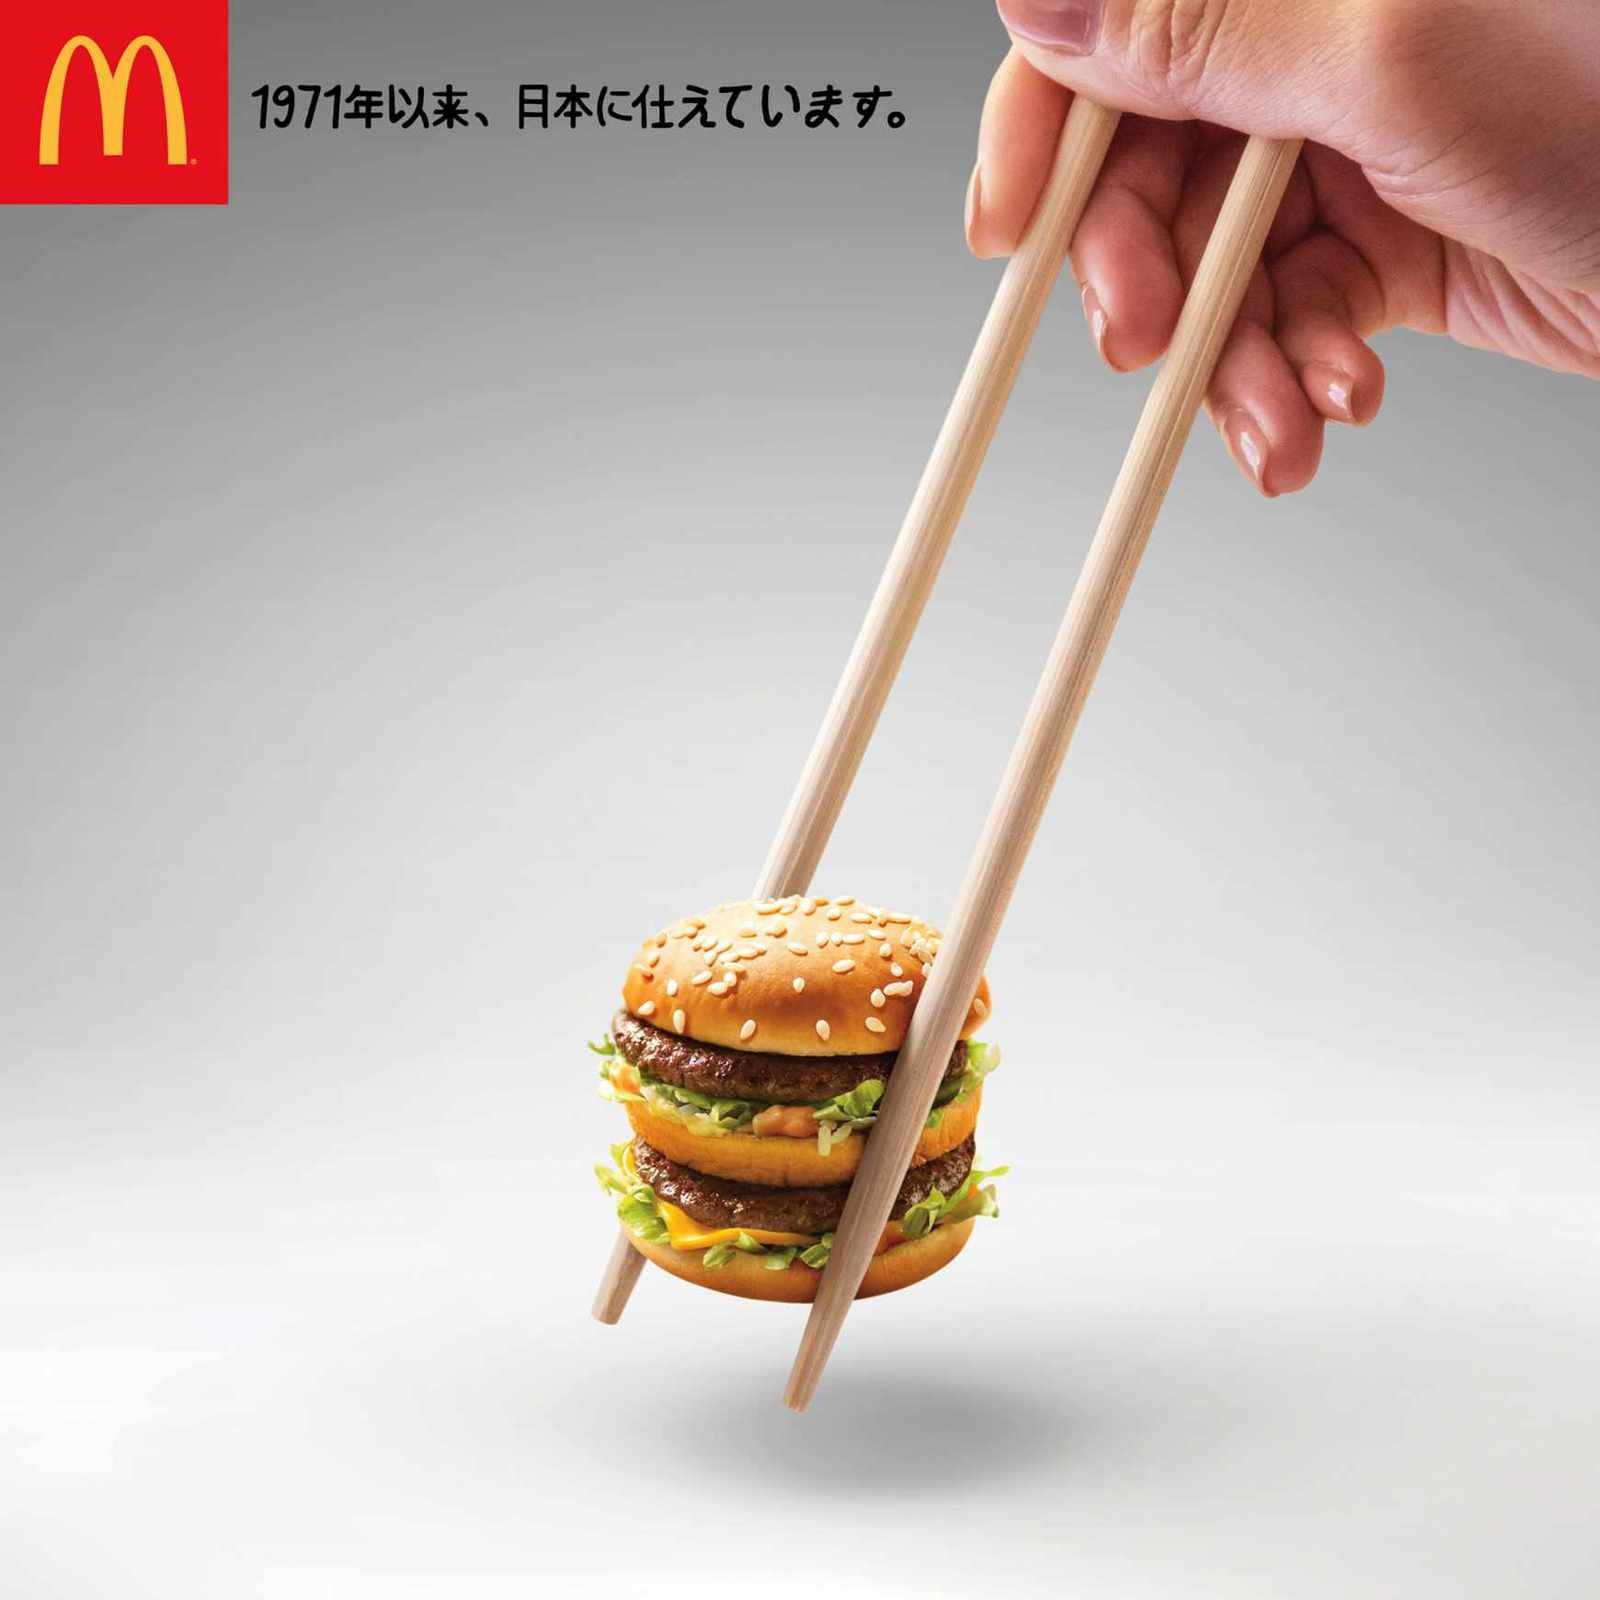 "Serving Japan since 1971." - McDonald's | Agence : Moroch, Dallas, Etats-Unis (août 2016)